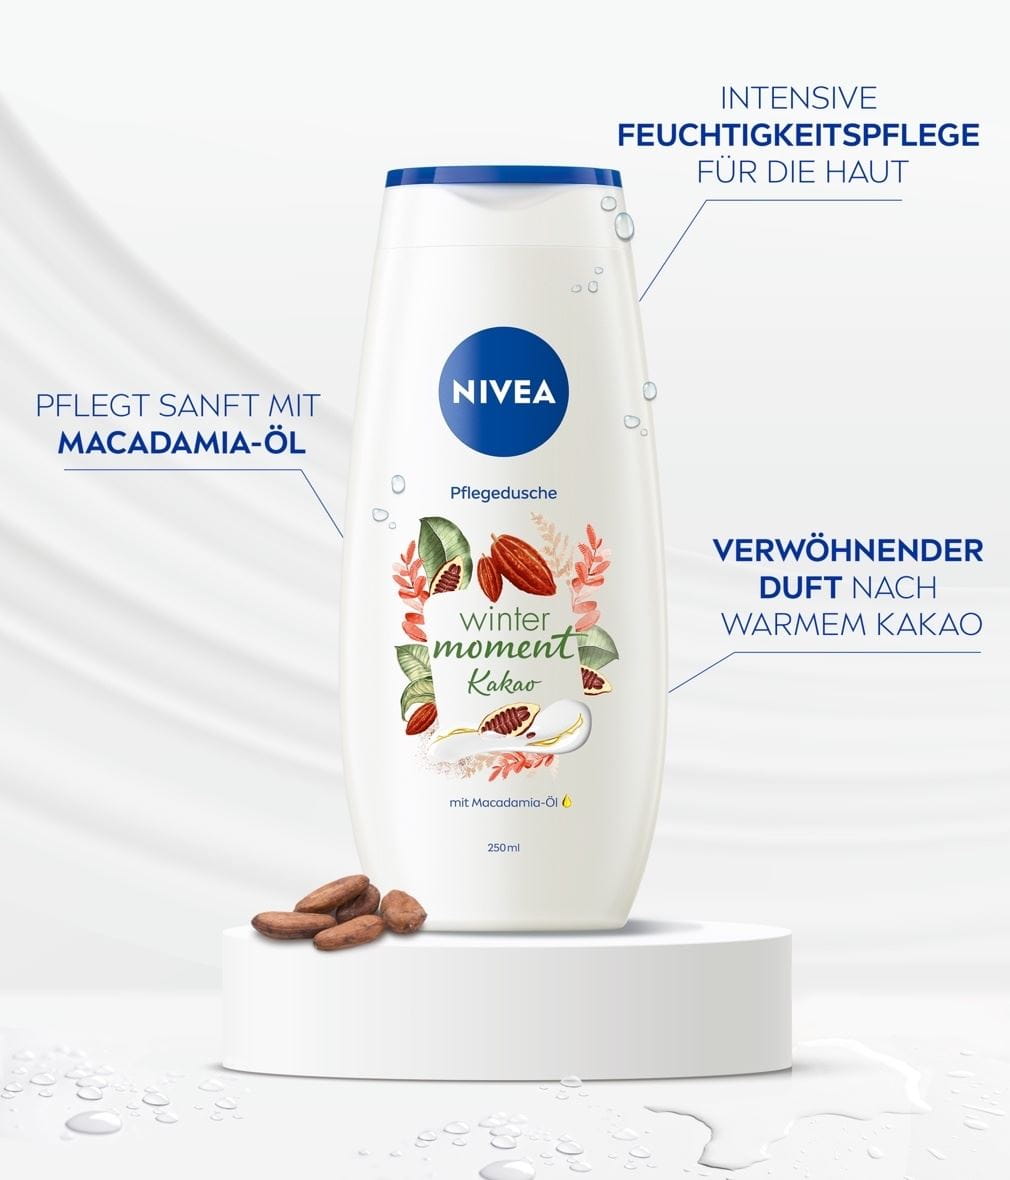 NIVEA Pflegedusche Winter Moment Kakao Macadamia Oel Produktabbildung mit Benefits